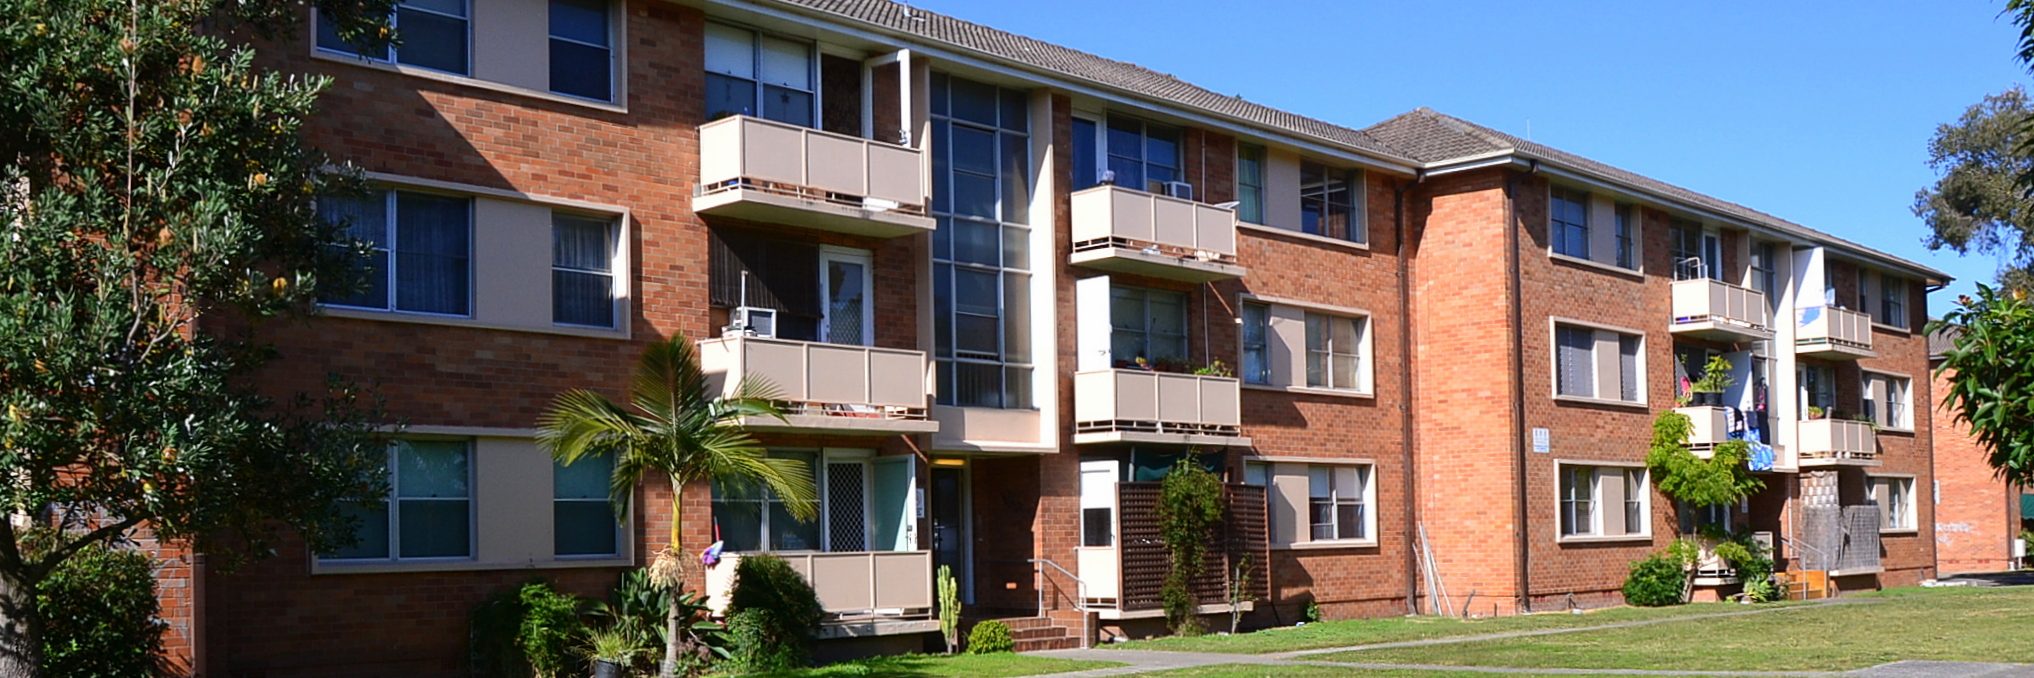 Public housing in Pagewood, Sydney